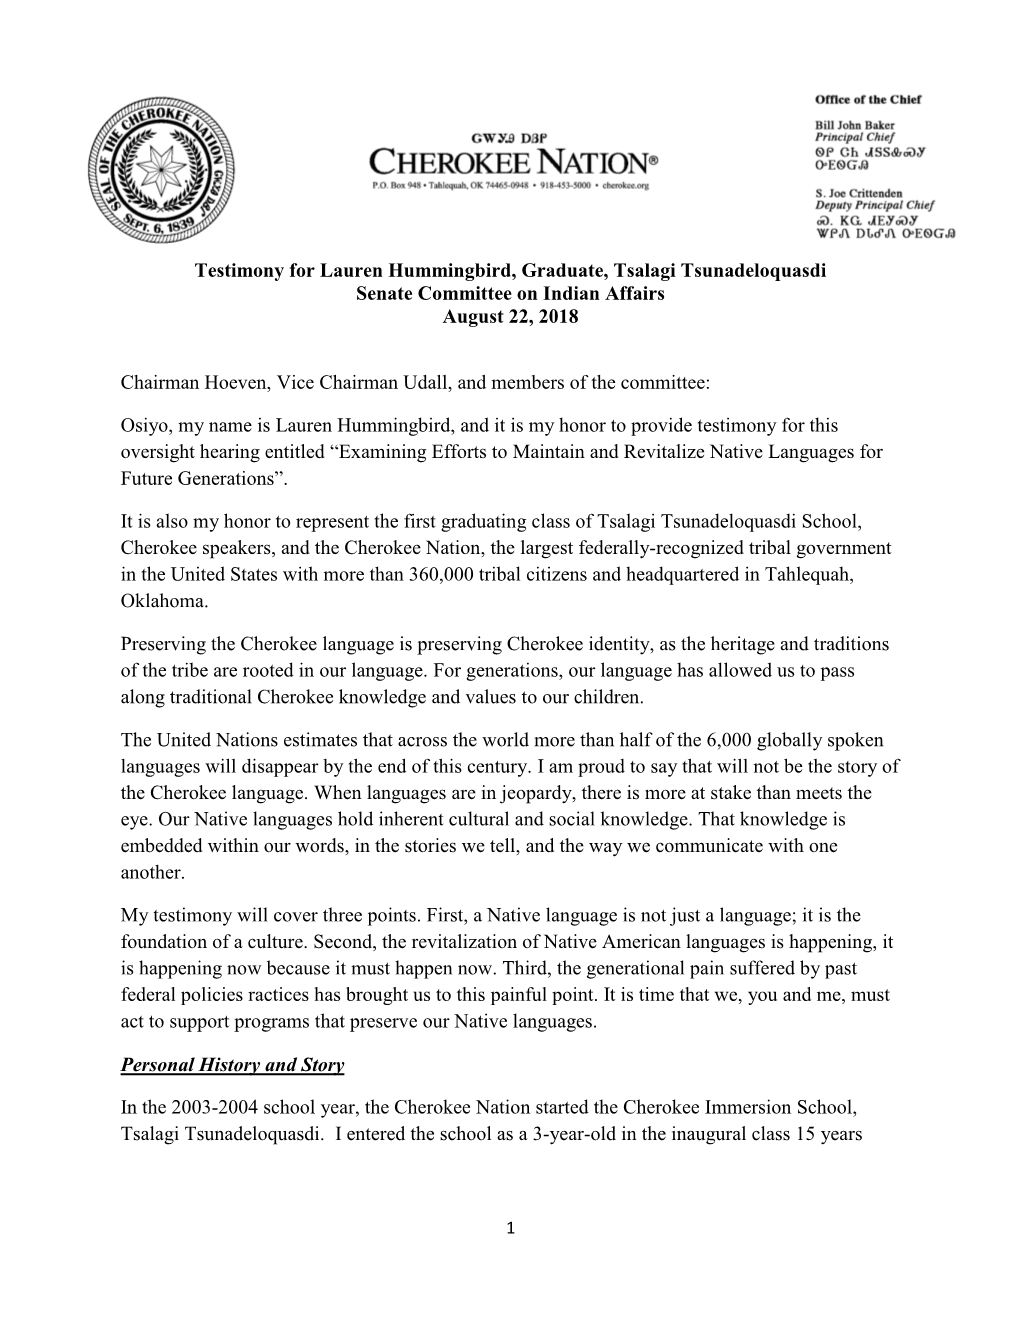 2011-2012 Cherokee Nation Letterhead